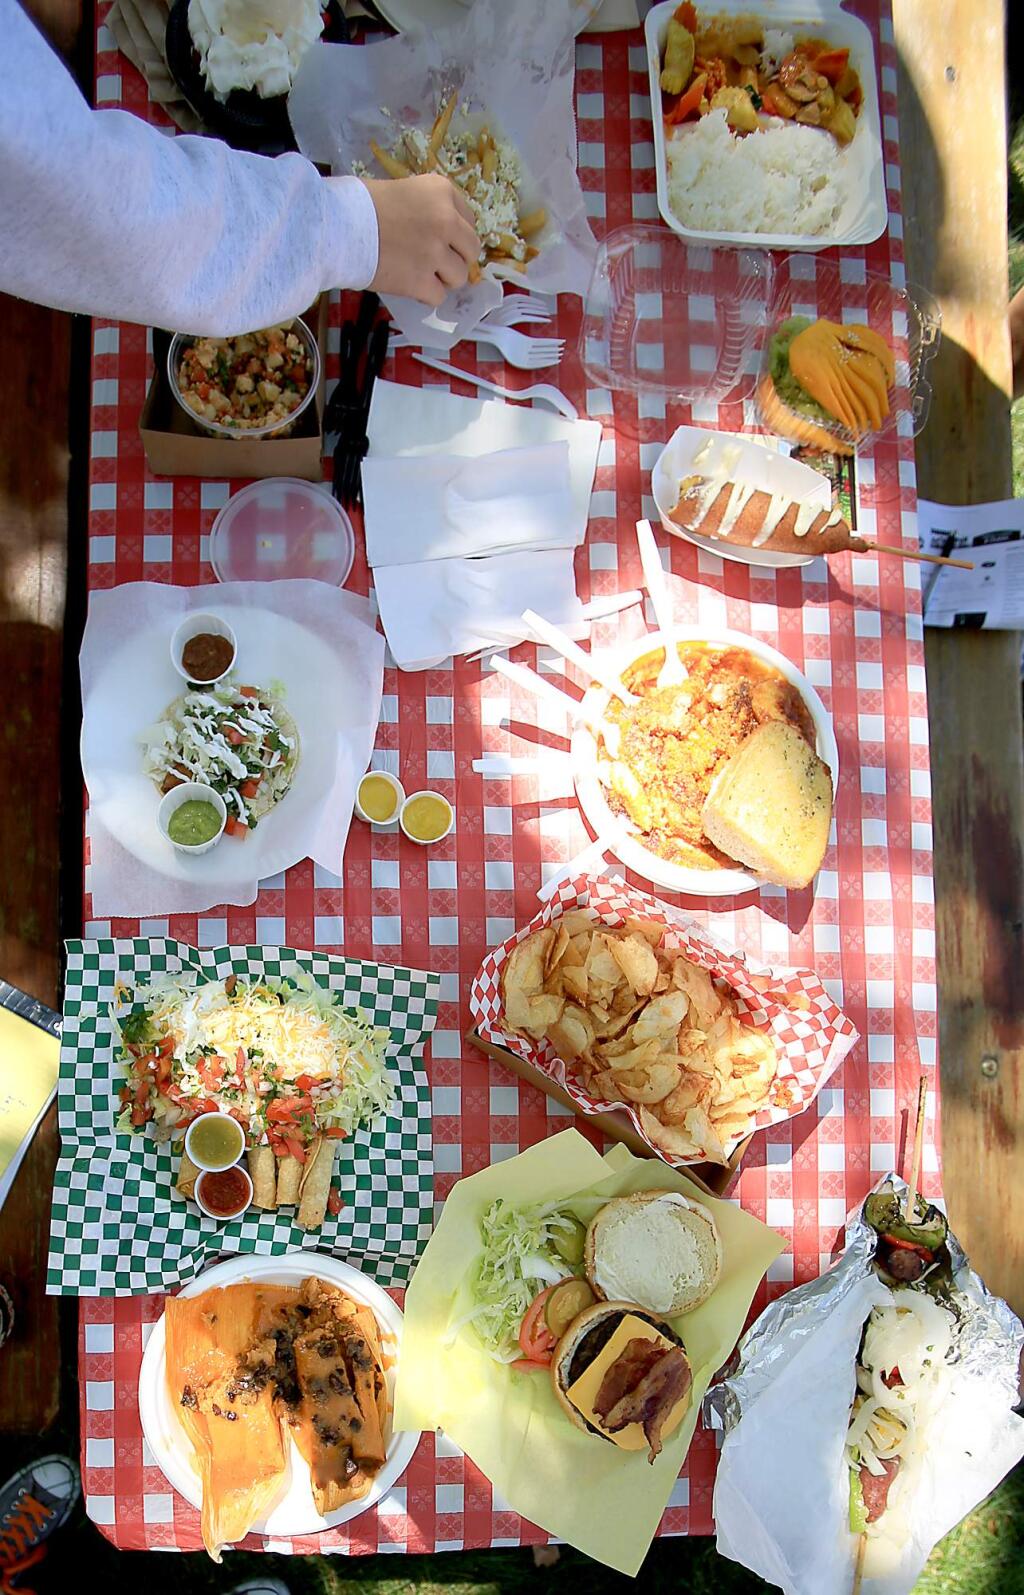 A table full of fair food at the Sonoma County Fair, Friday July 24, 2015 in Santa Rosa. (Kent Porter / Press Democrat) 2015